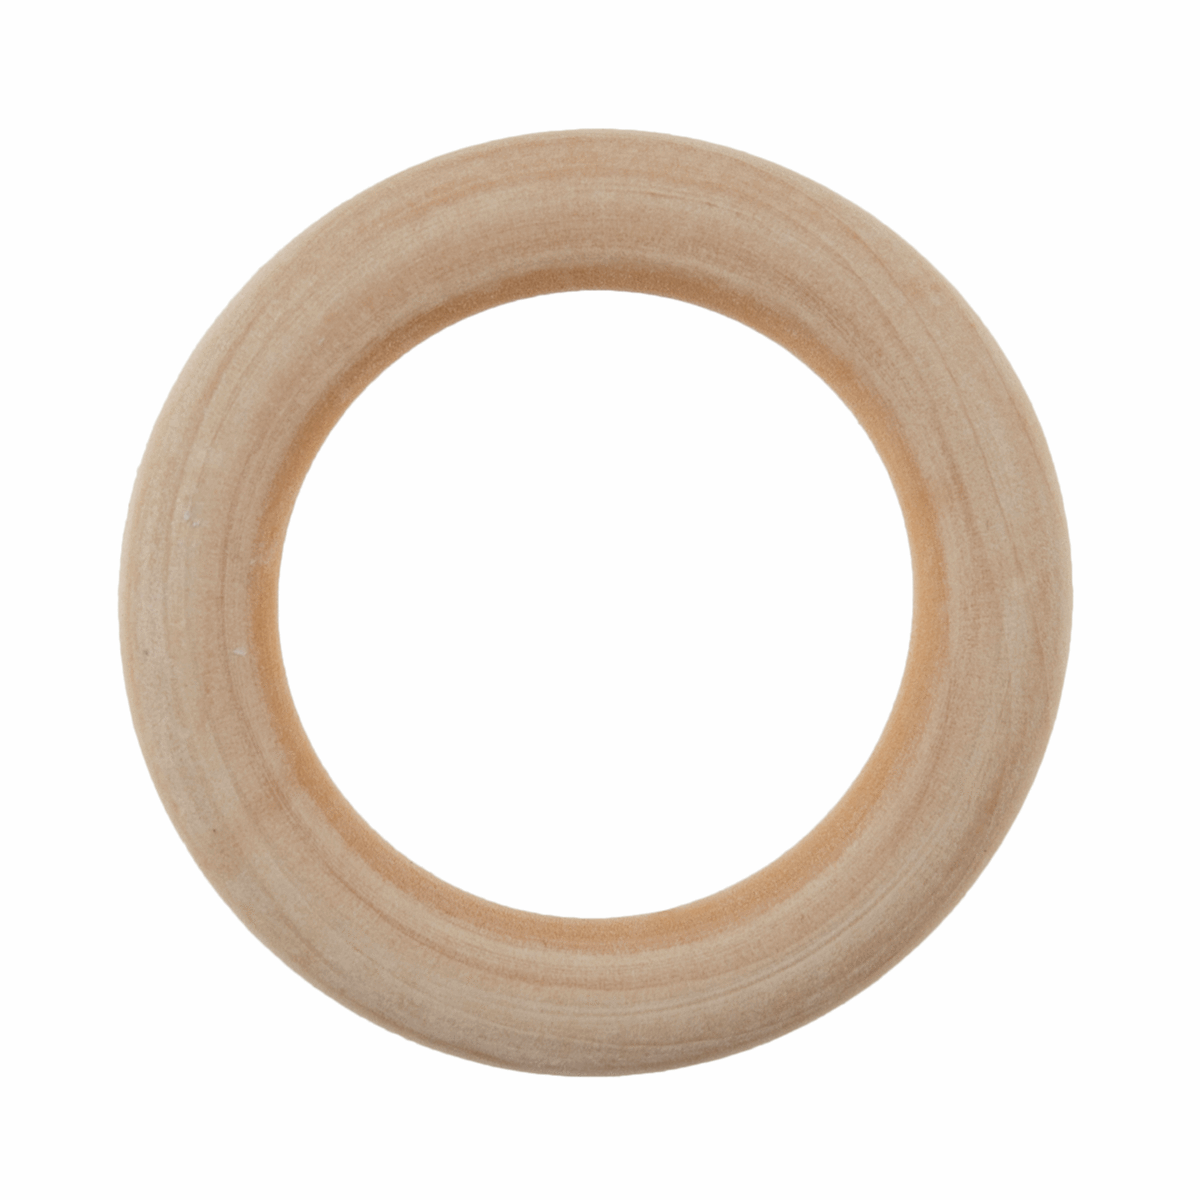 Trimits Macrame Round Wooden Craft Ring - 5.5cm Diameter